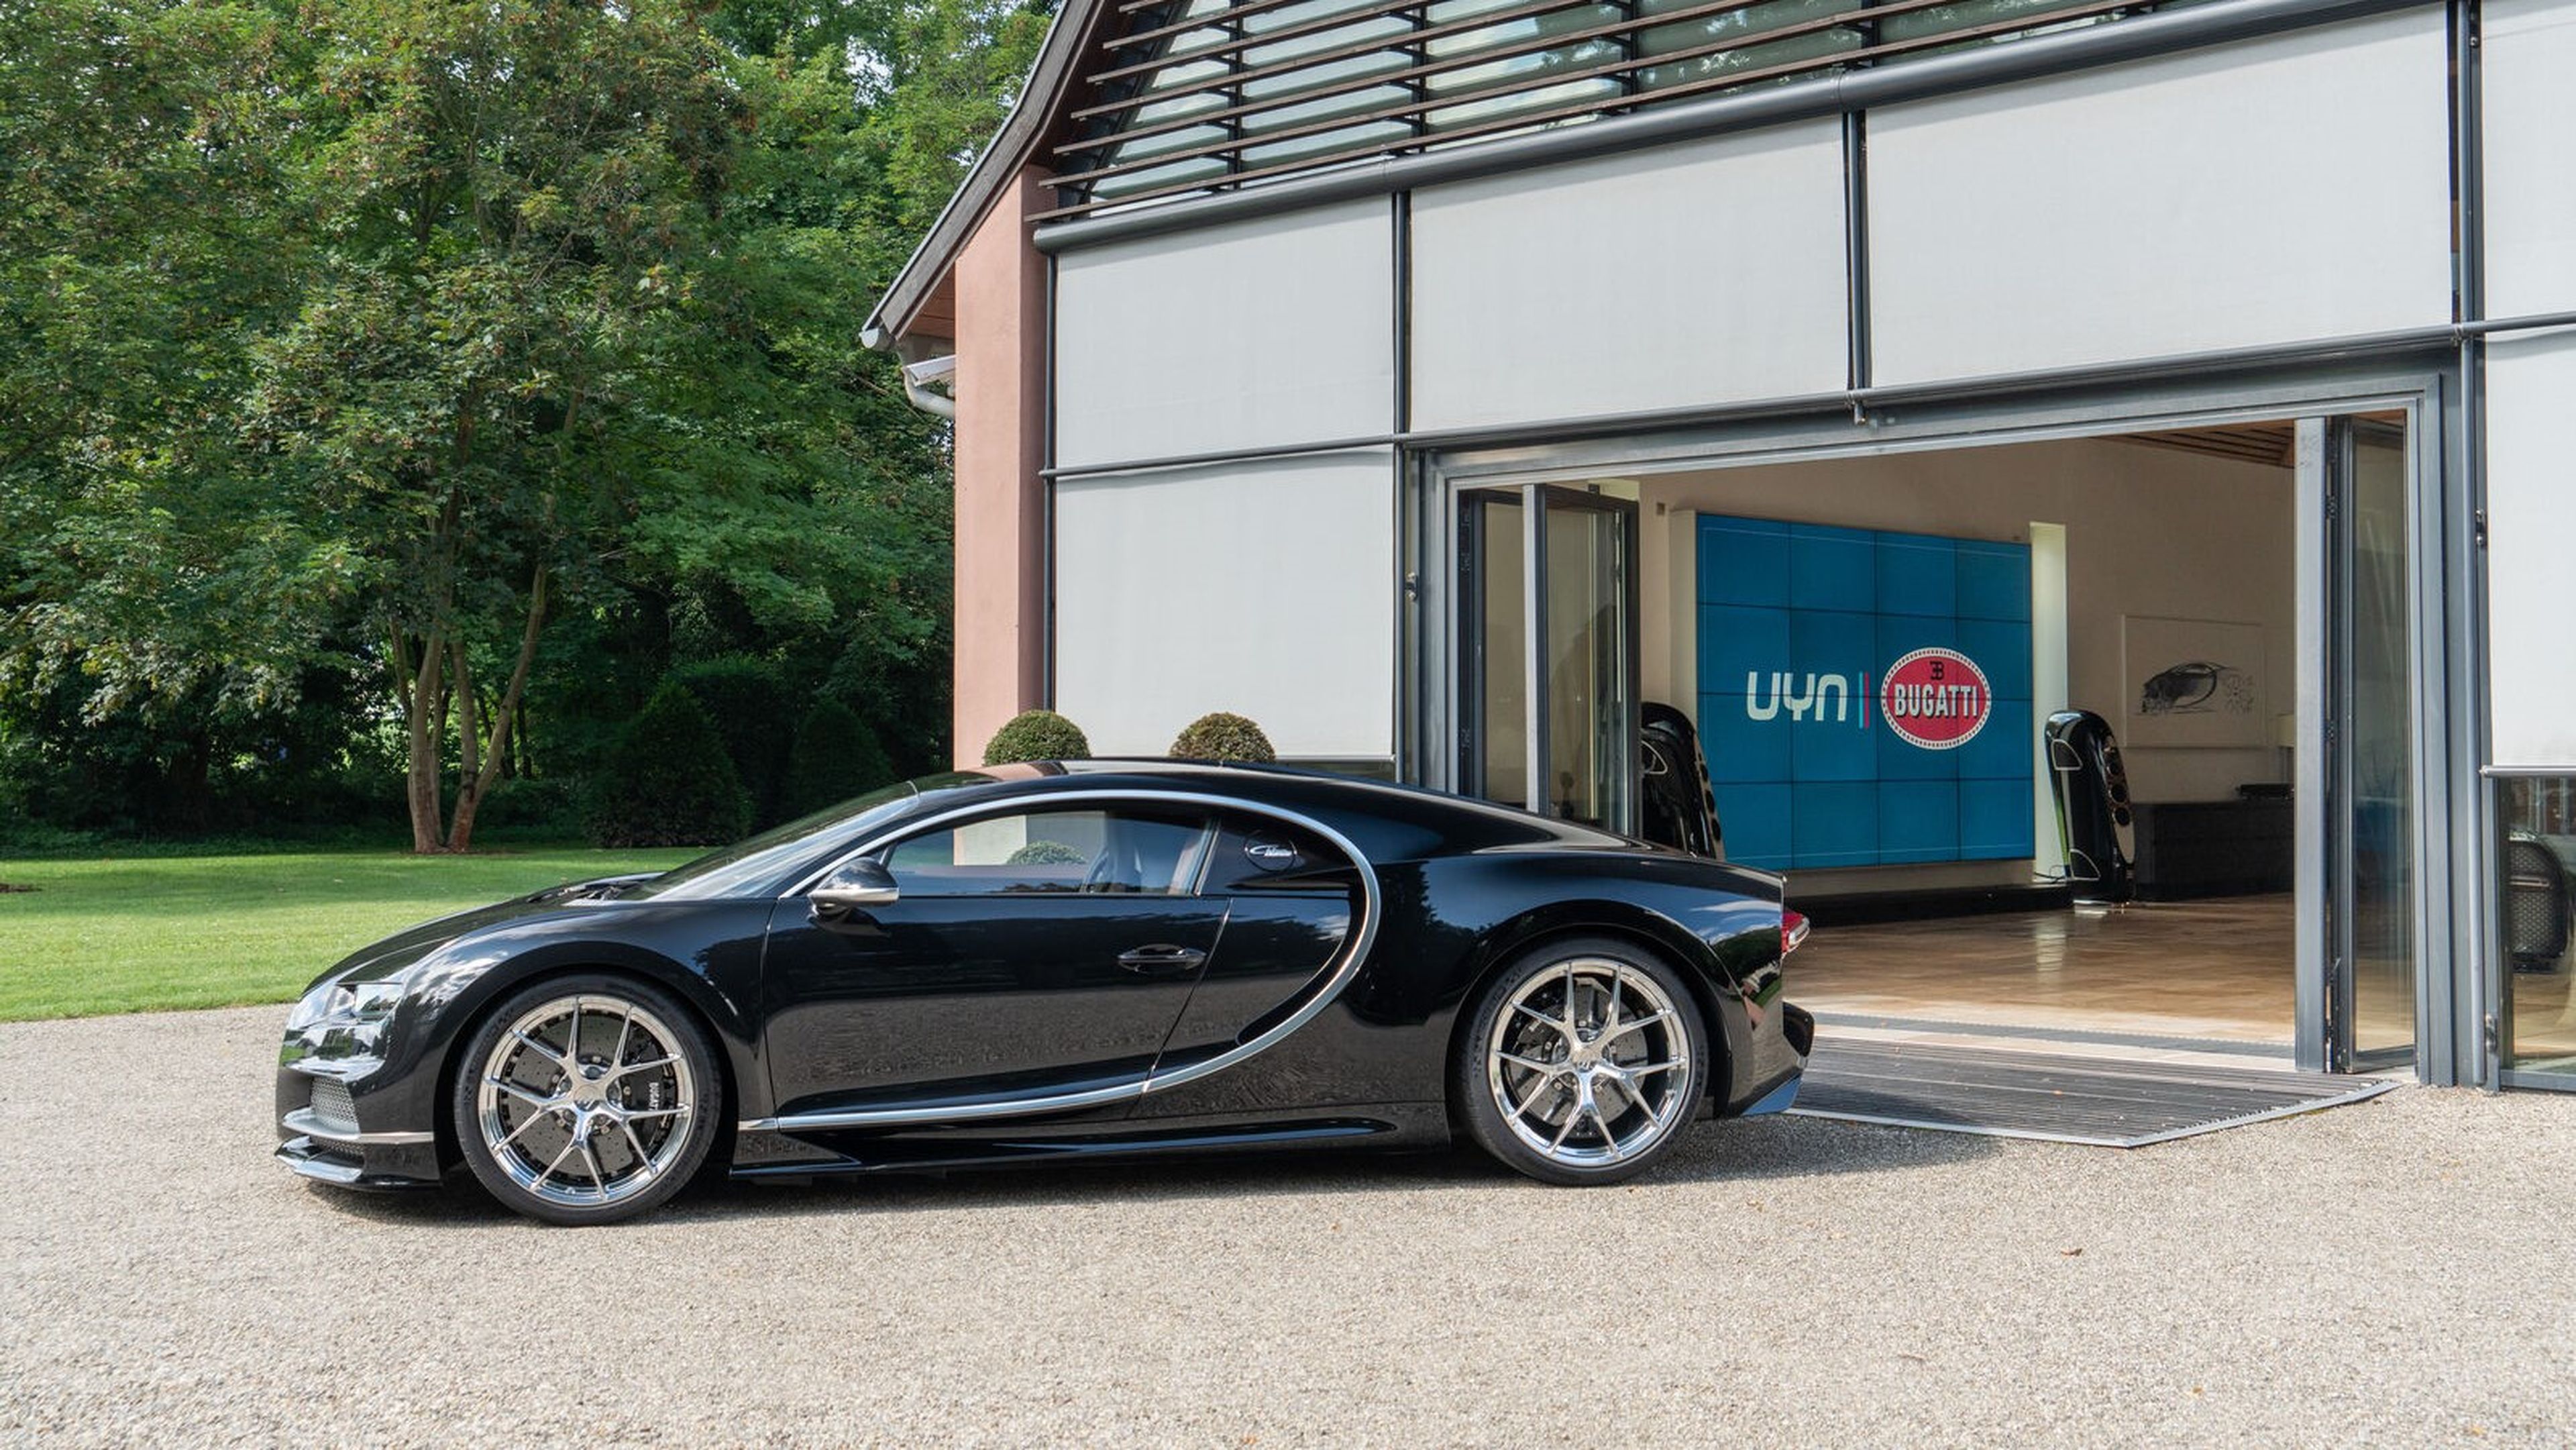 Colección Uyn for Bugatti